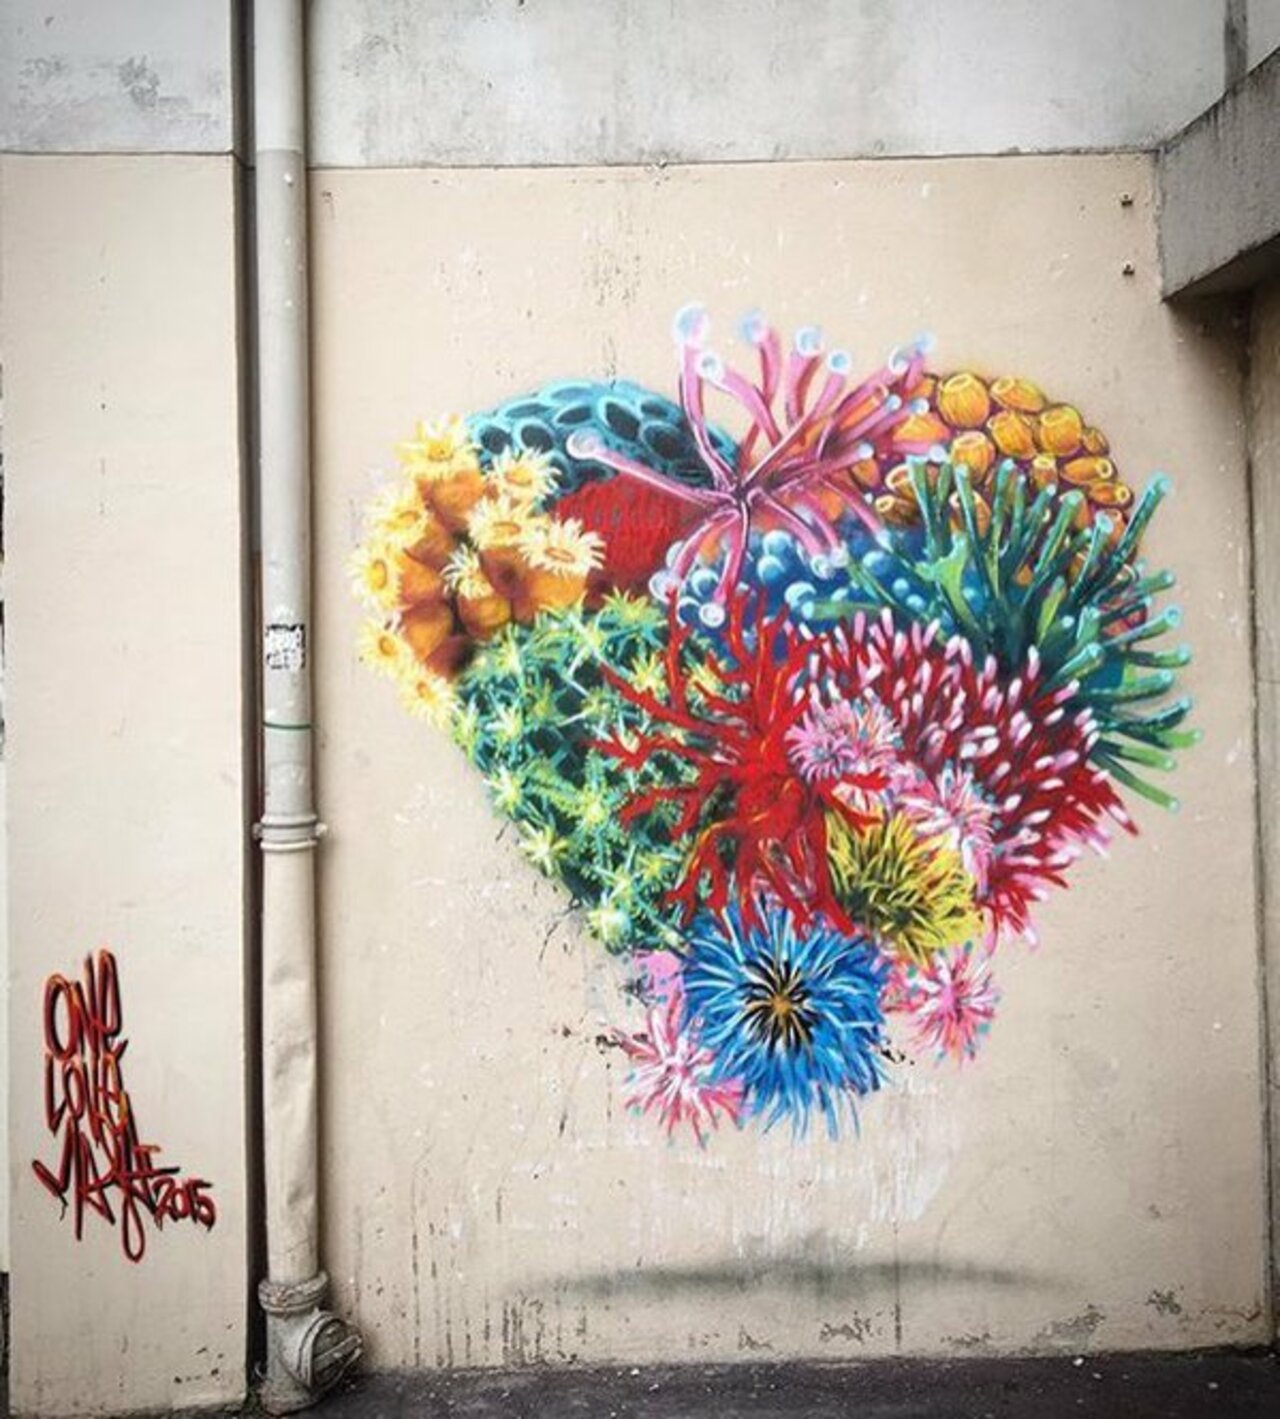 Street Art • Louis Masai Found in Paris #art #mural #graffiti #streetart https://t.co/D6oLptchyc